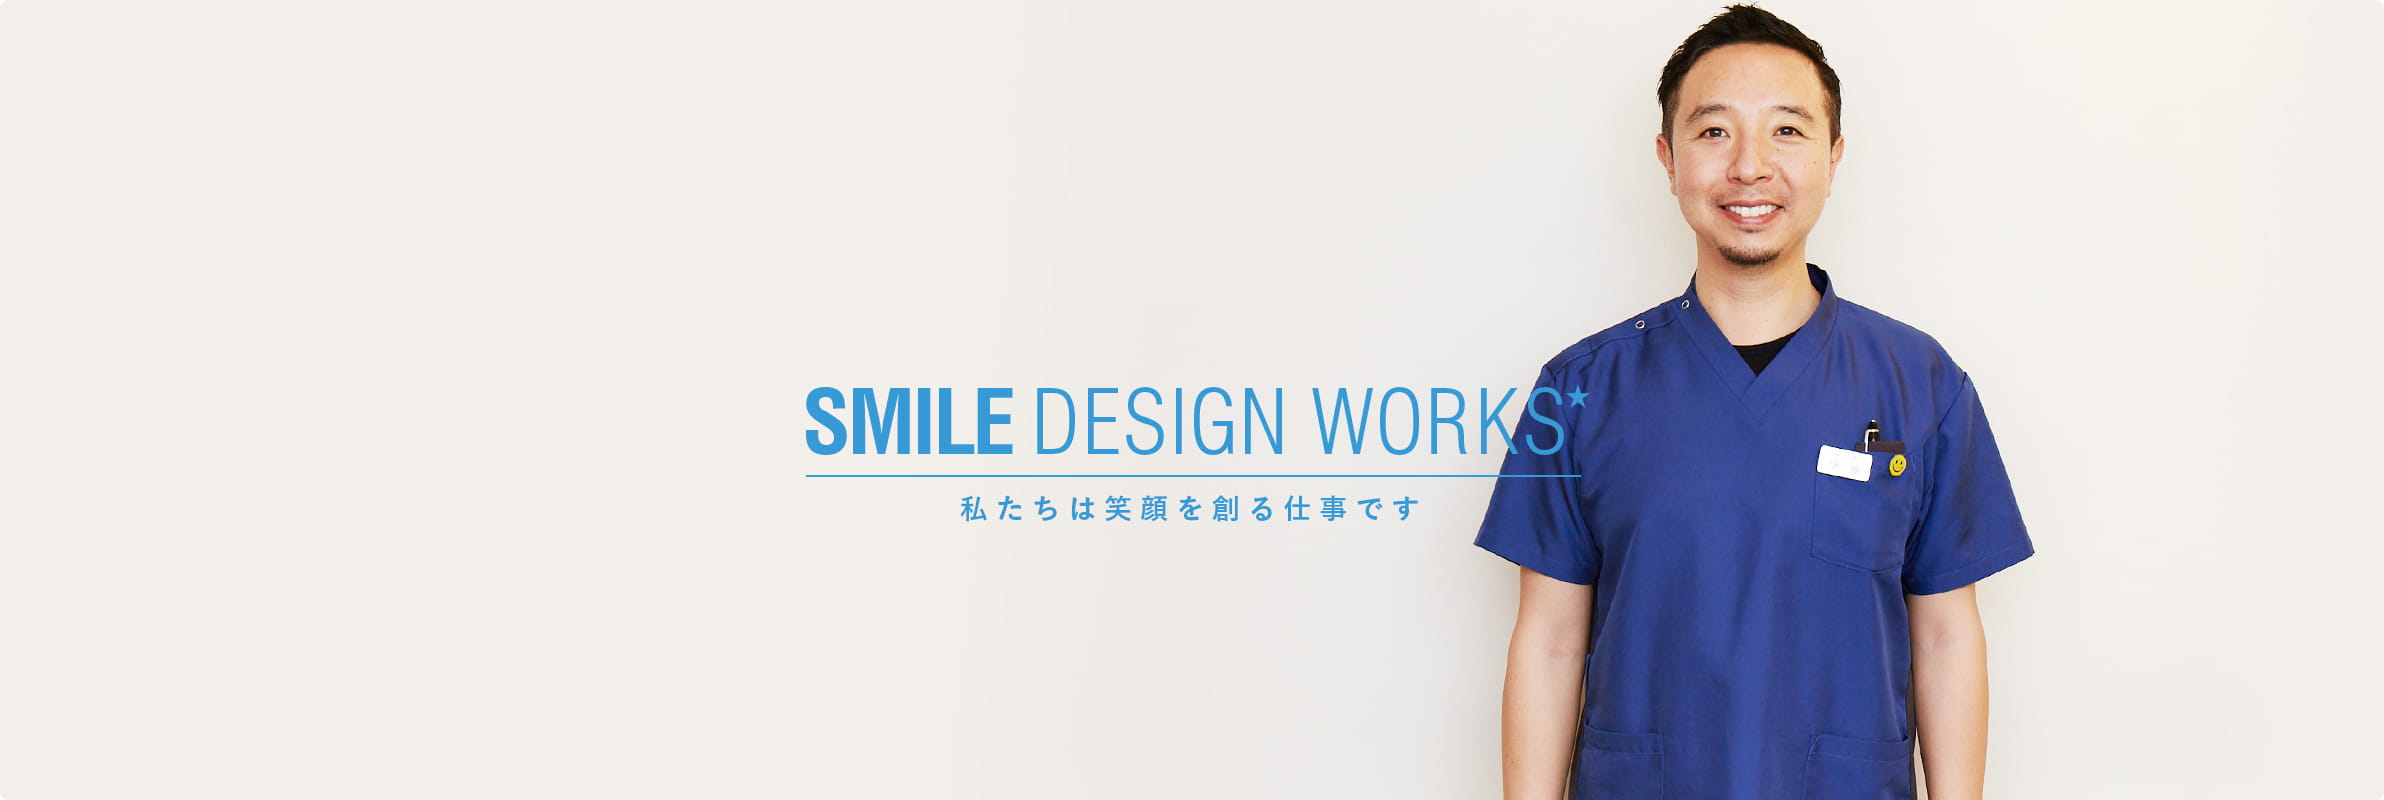 SMILE DESIGN WORKS 私体は笑顔を創る仕事です